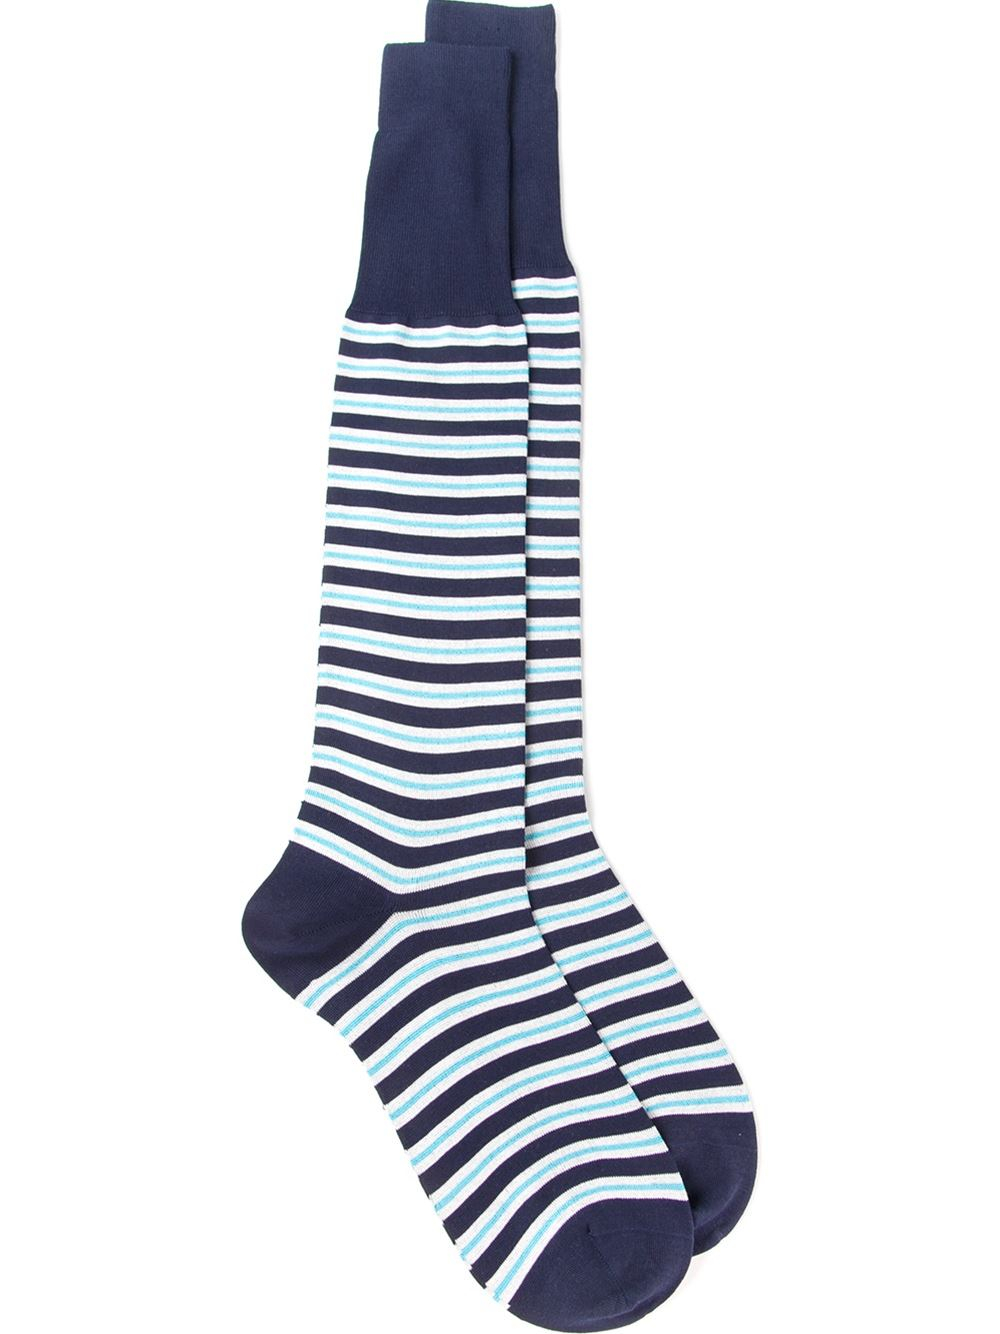 Canali Cotton Long Striped Socks in Blue for Men - Lyst